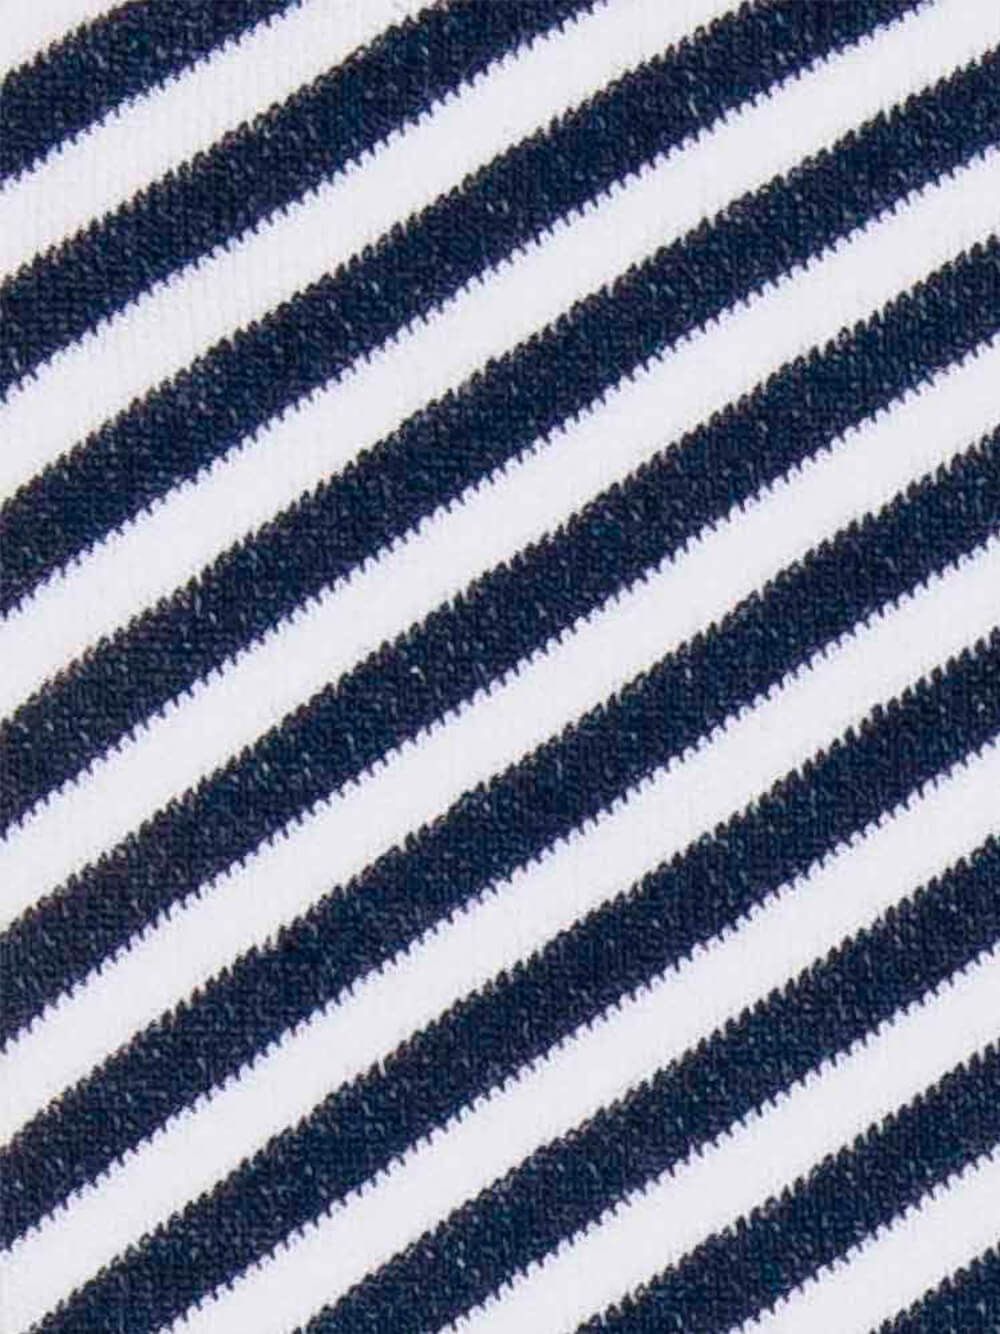 Marine Diagonal Striped Socks | Lolo Carolo